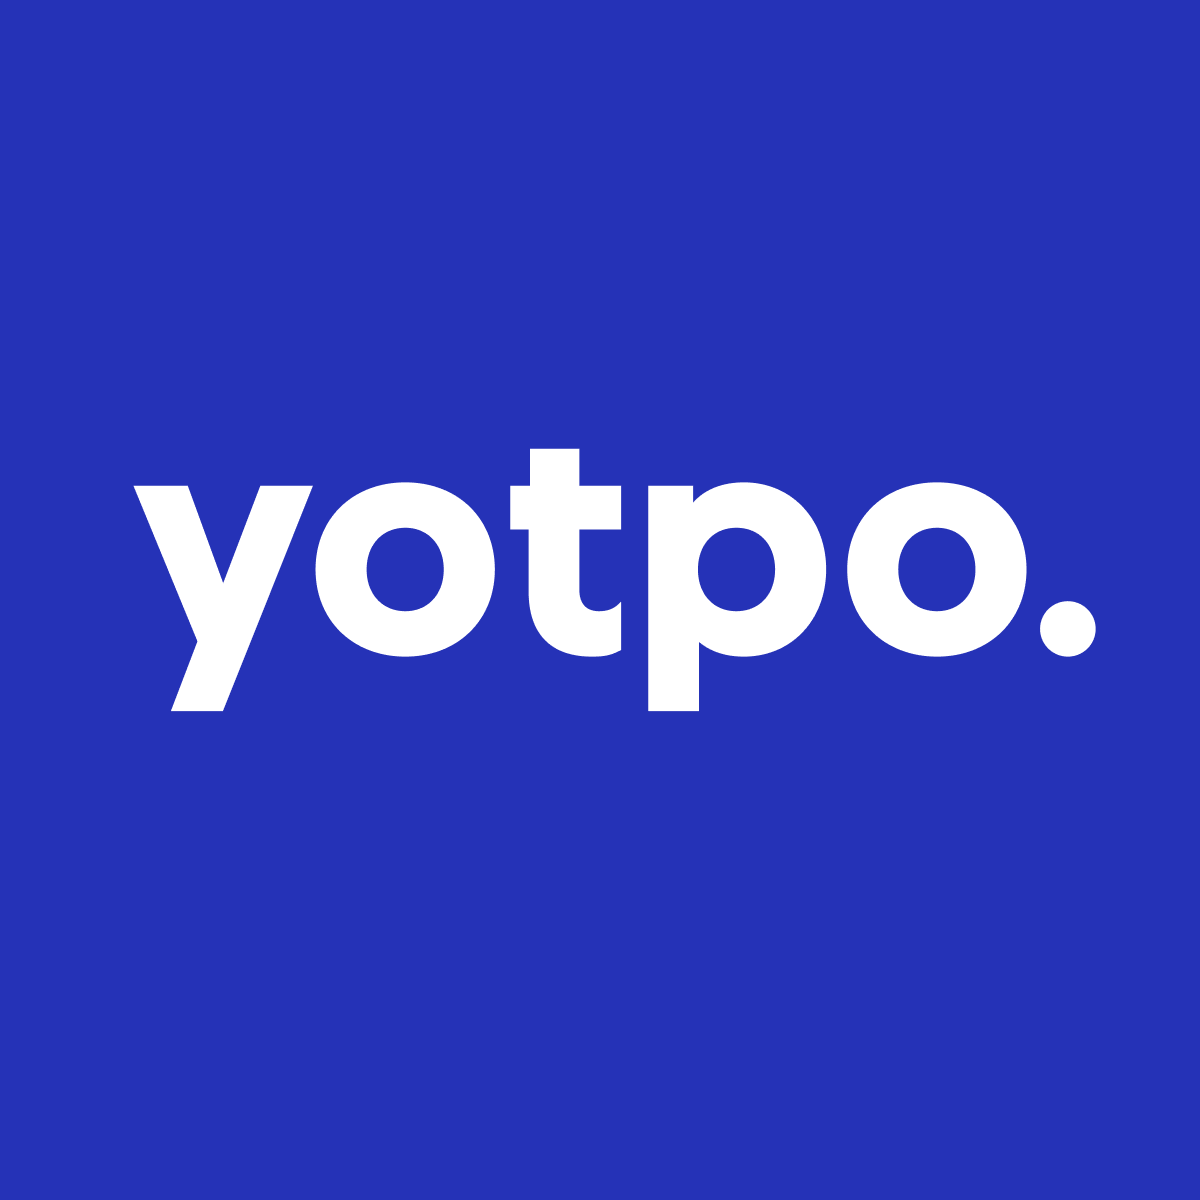 Yotpo: Loyalty & Rewards